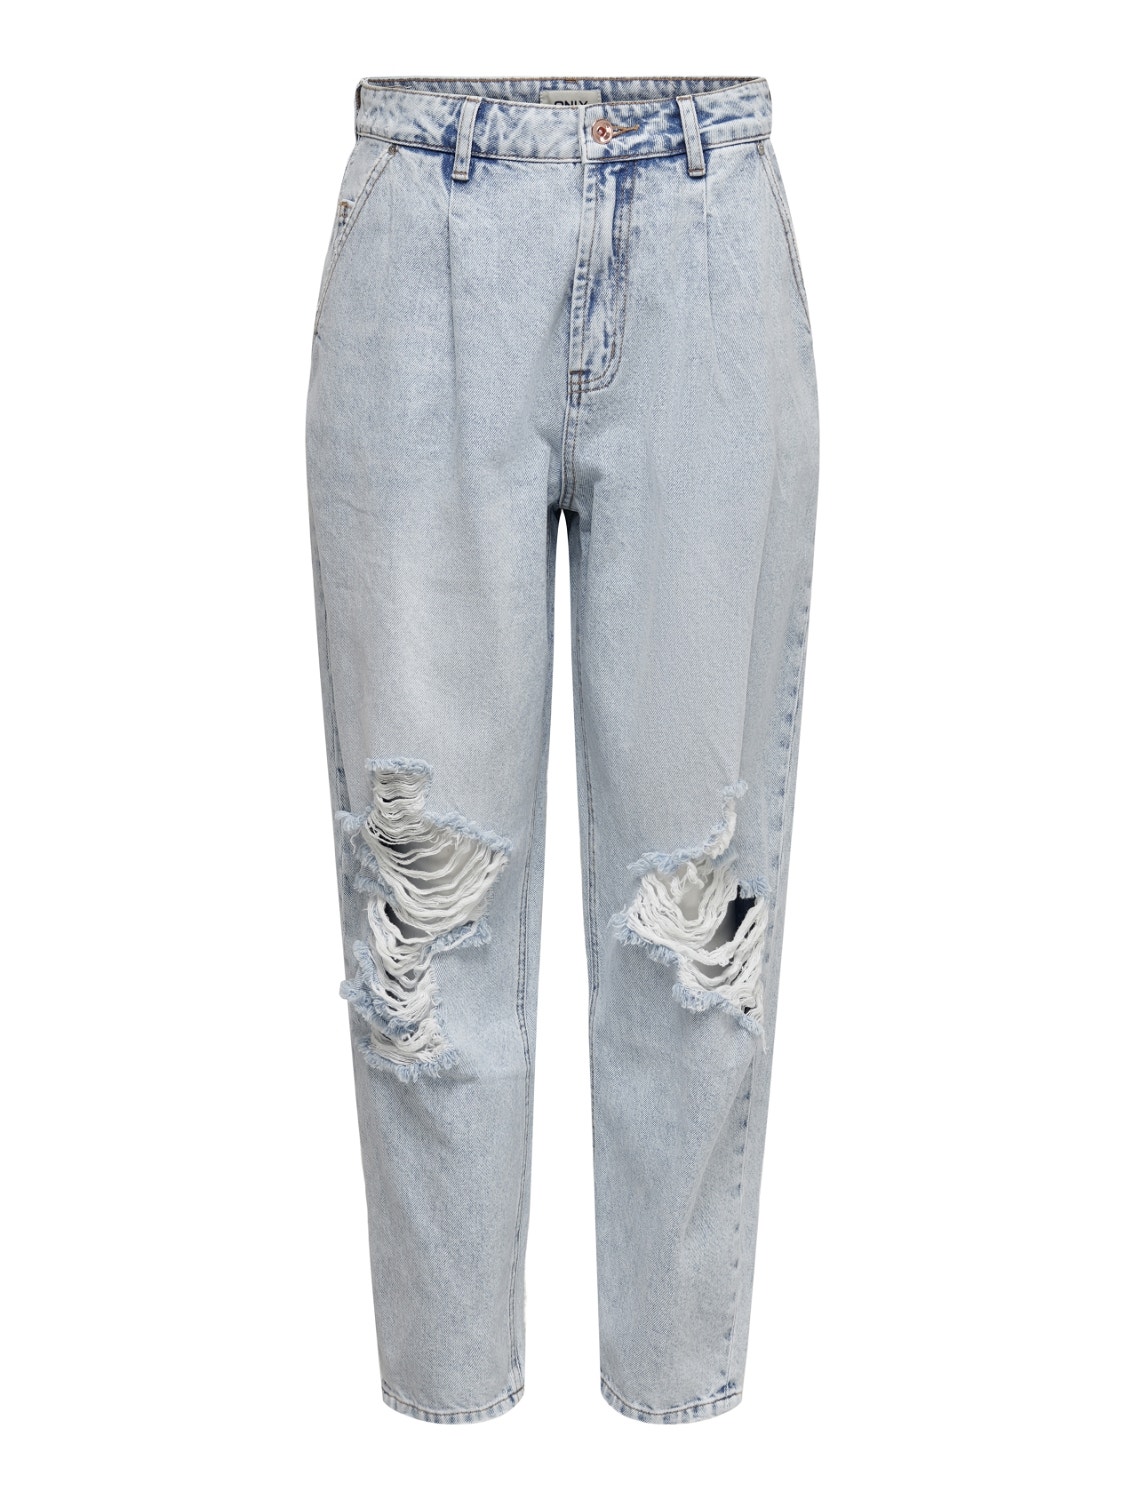 ONLY Corte globo ONLVerna Jeans de talle alto -Light Blue Denim - 15250054